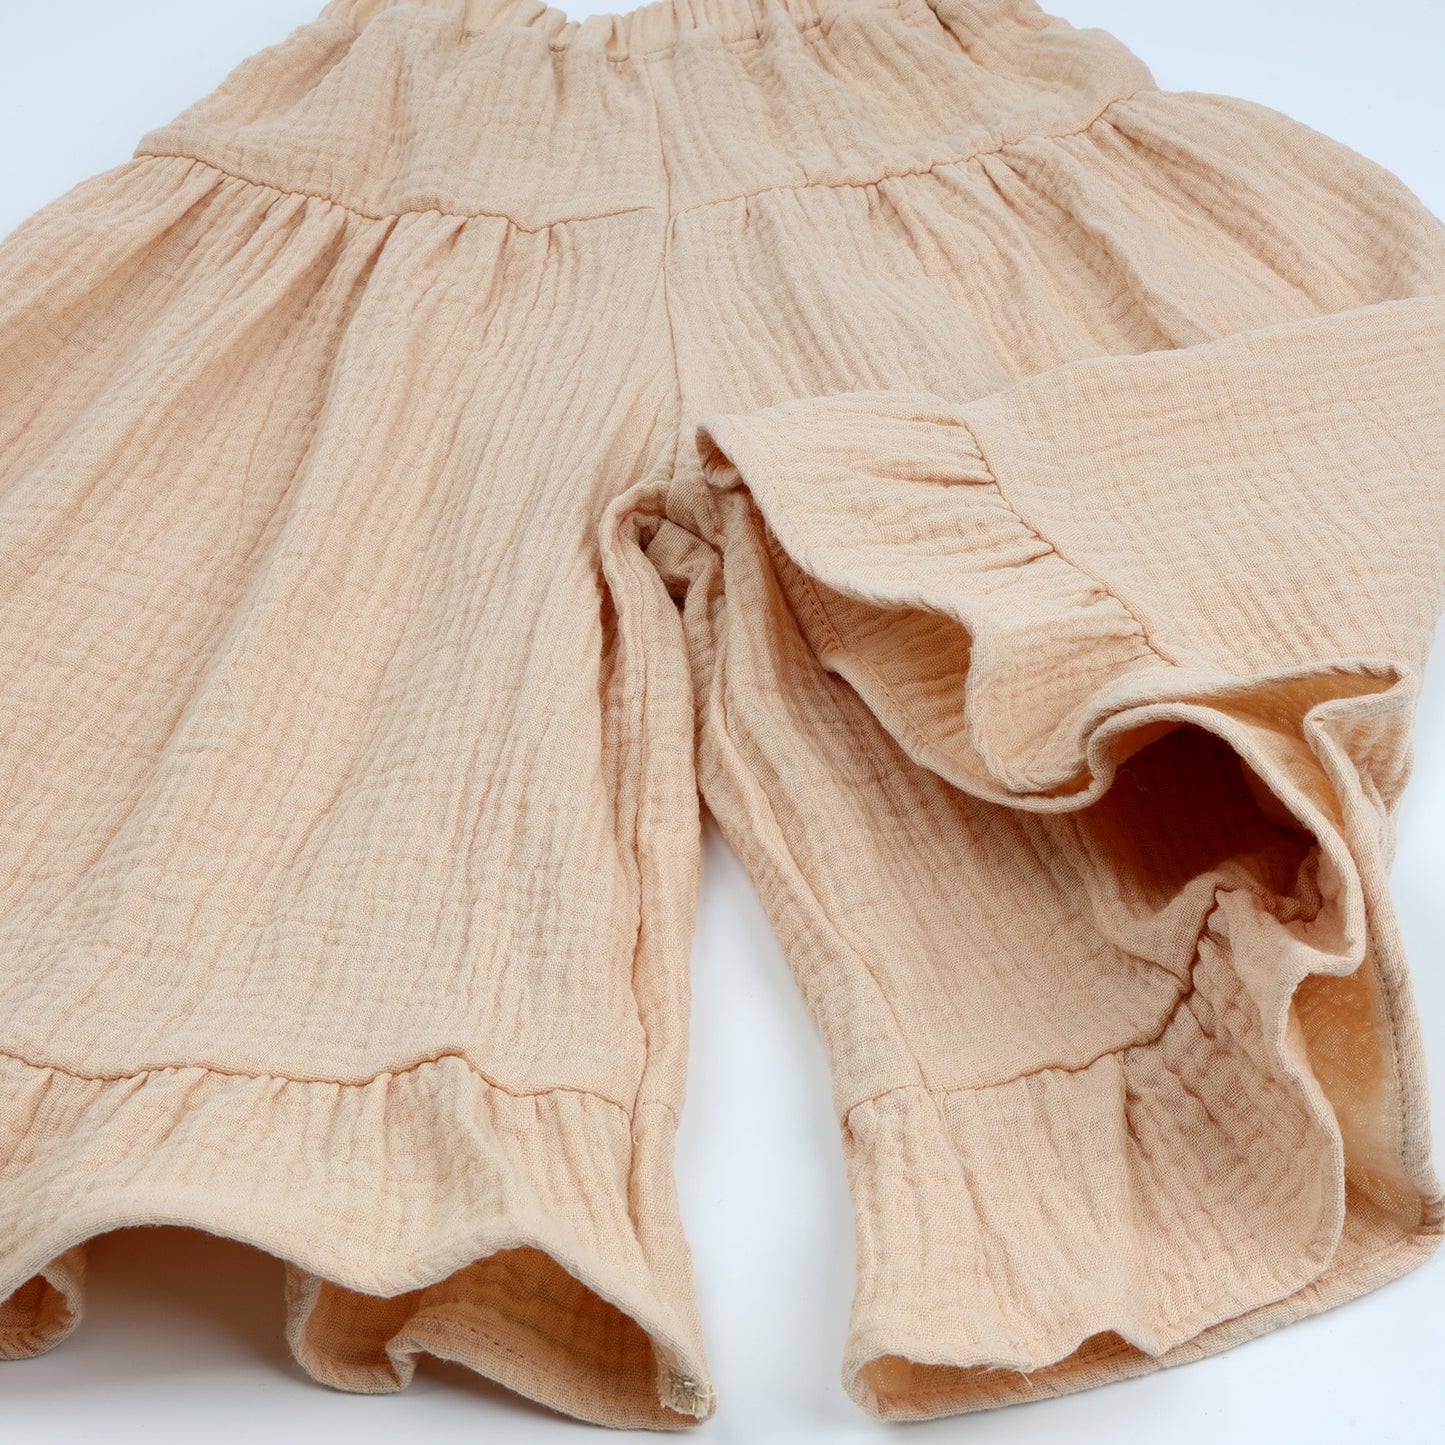 Baby and Little Girls Soft Cotton Gauze Wide Leg Ruffled Pants